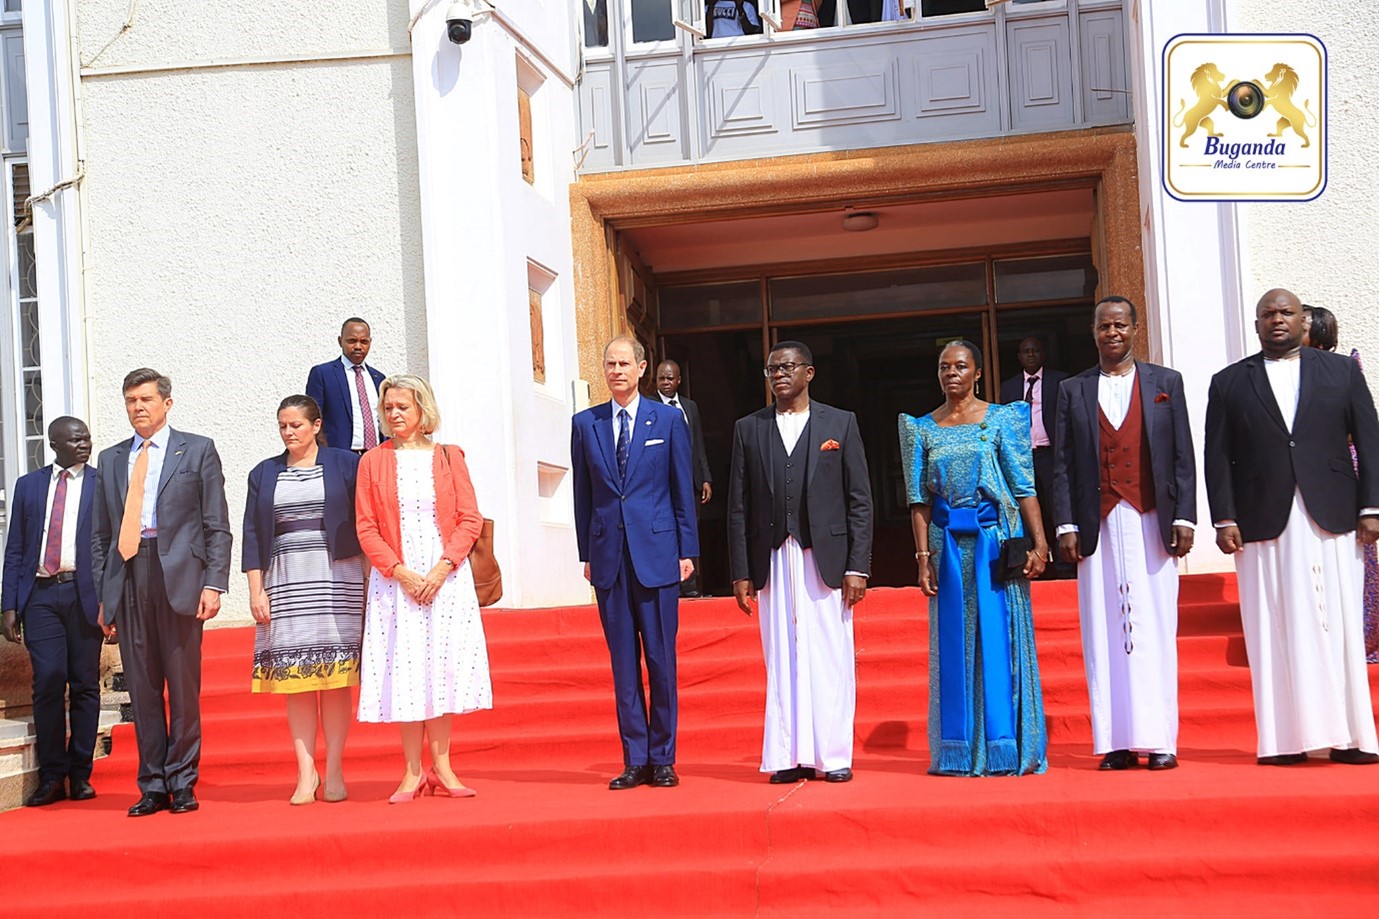 Prince Edward and his team were welcomed by the Katikkiro, Princes Agnes Nabaloga and the Buganda Princes Wassajja and Junju.